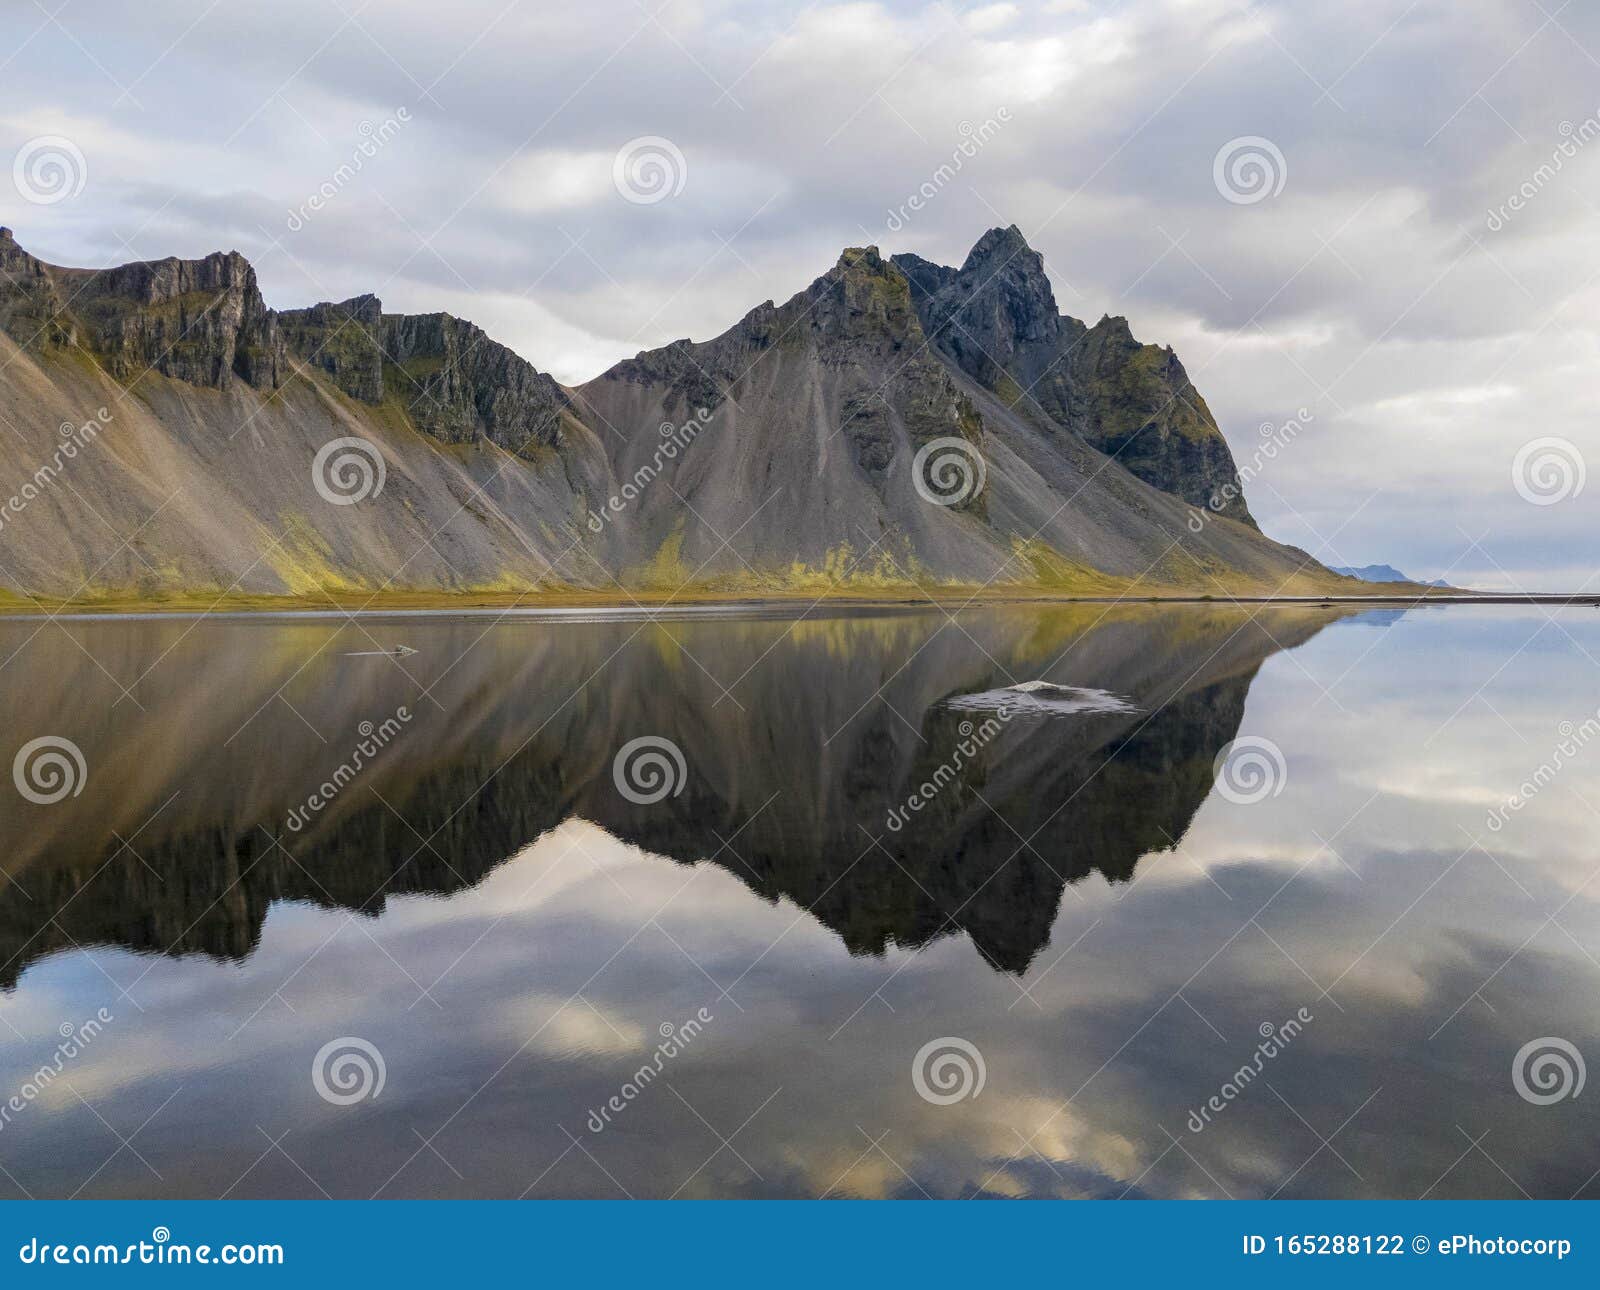 mountain reflection, hofn, iceland